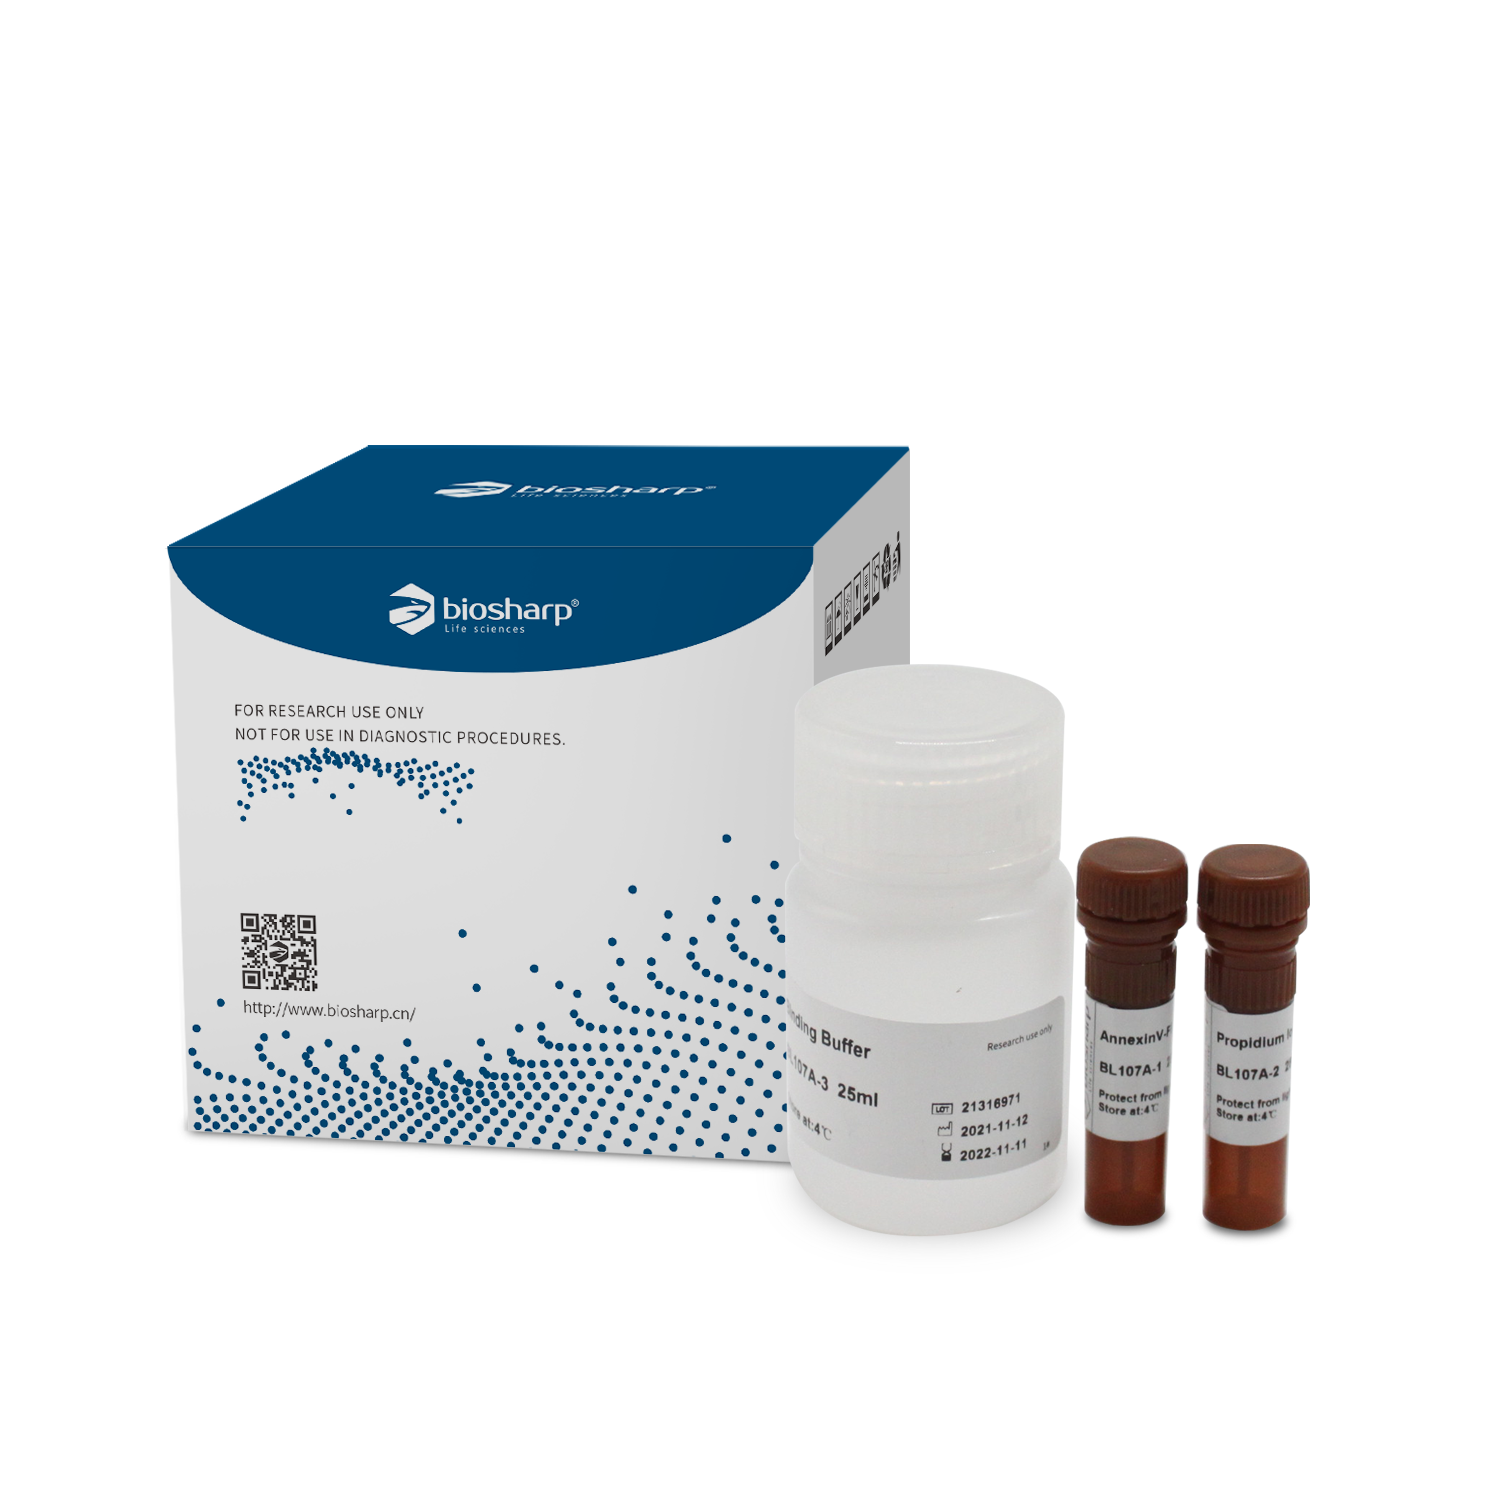 Biosharp BL107A AnnexinV-FITC/PI双染细胞凋亡检测试剂盒(增强型)